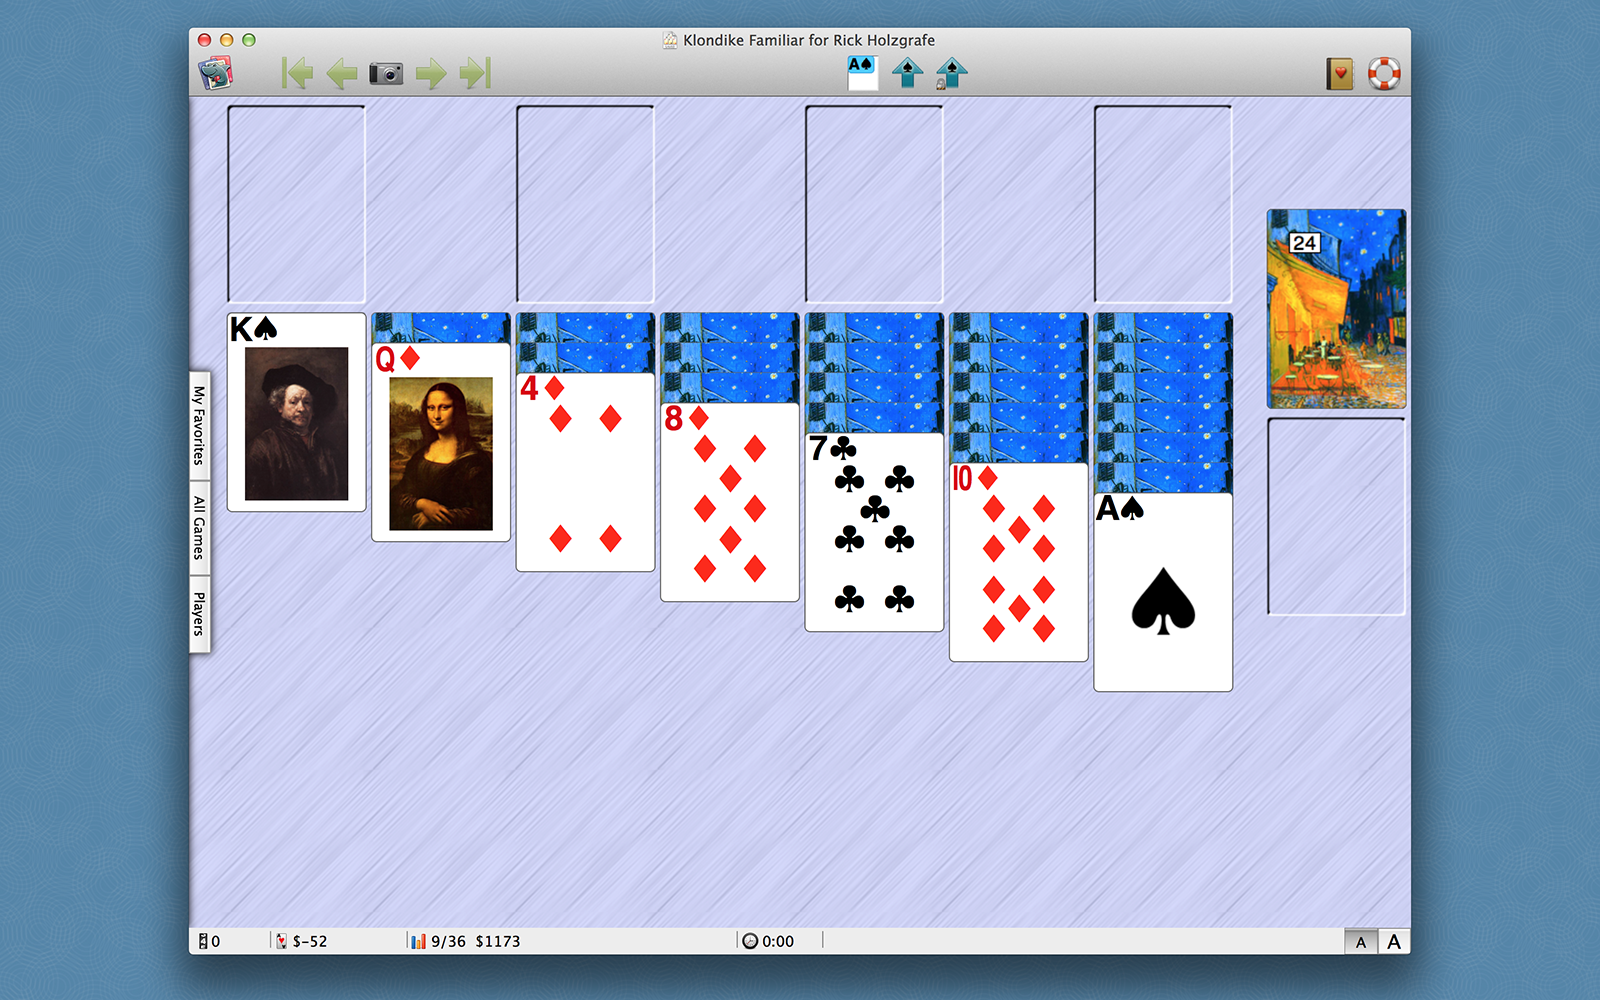 full deck solitaire for 32bit mac